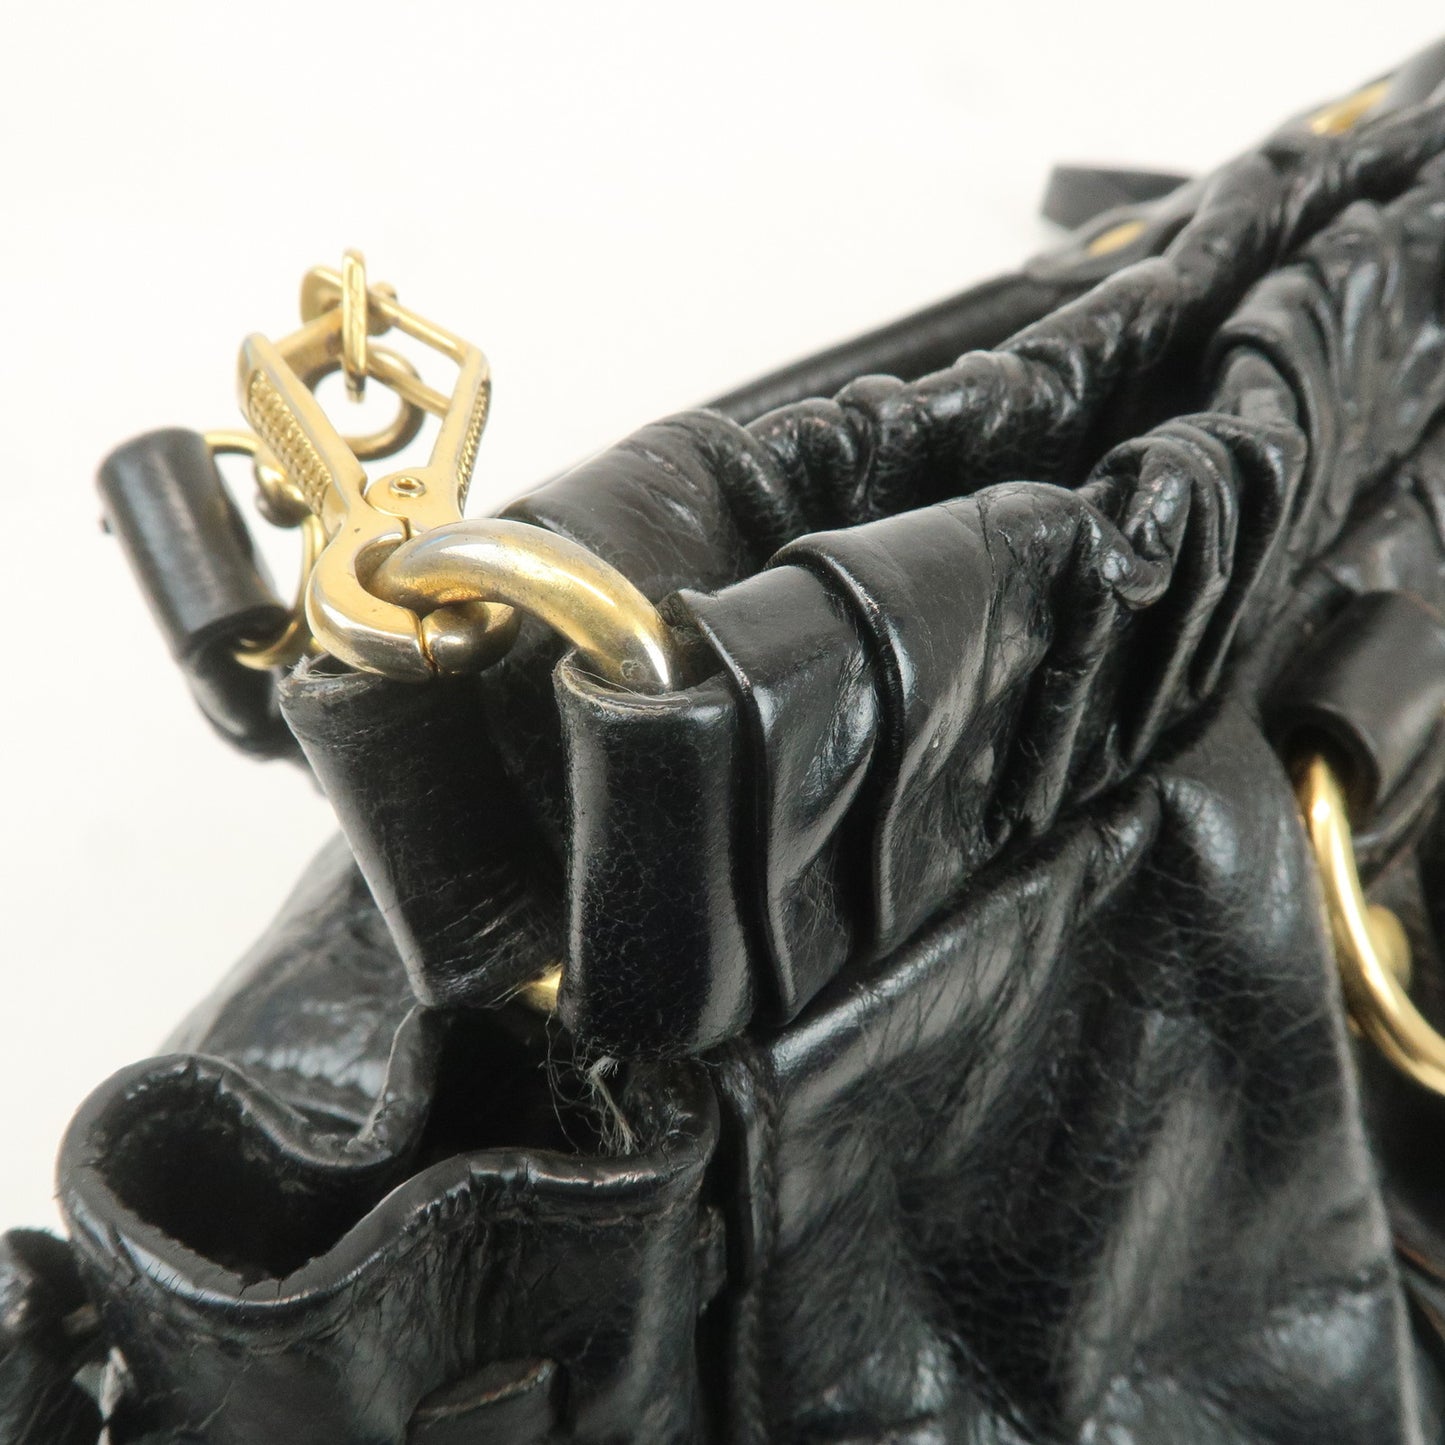 MIU MIU Leather 2Way Shoulder Bag Hand Bag Black RT0383